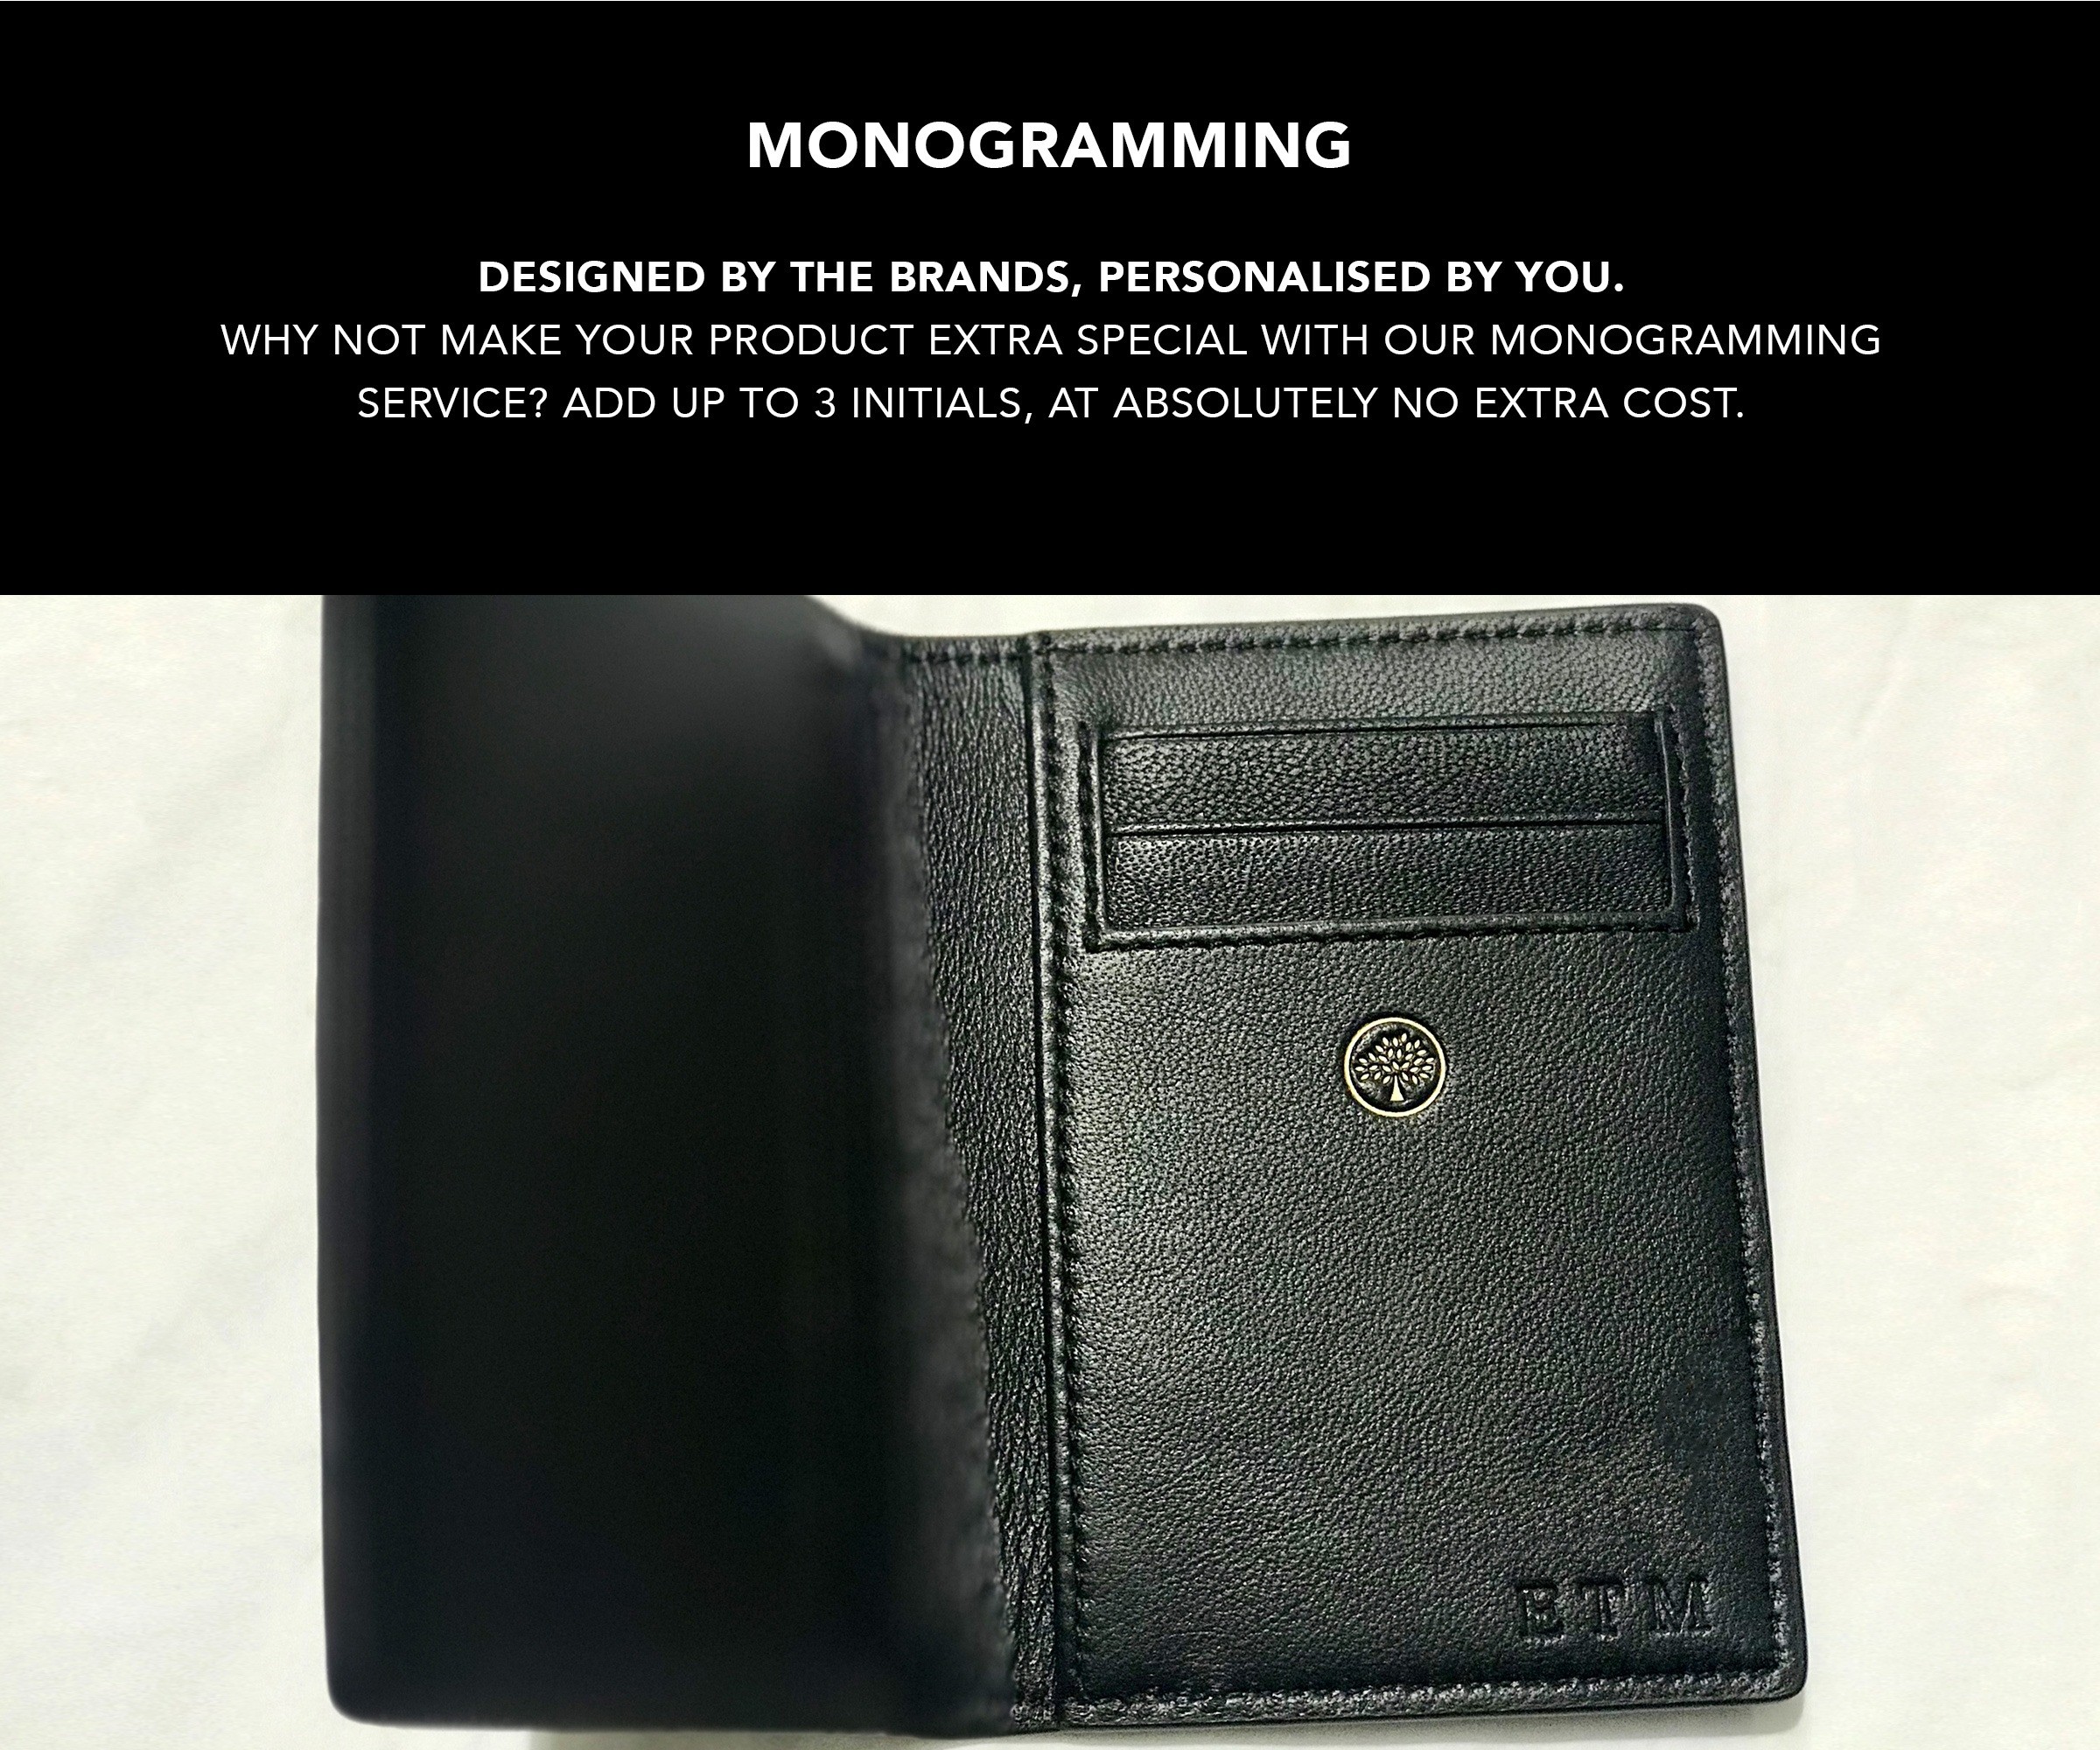 Paul Smith 'Mixed-Stripe' Leather Billfold Wallet